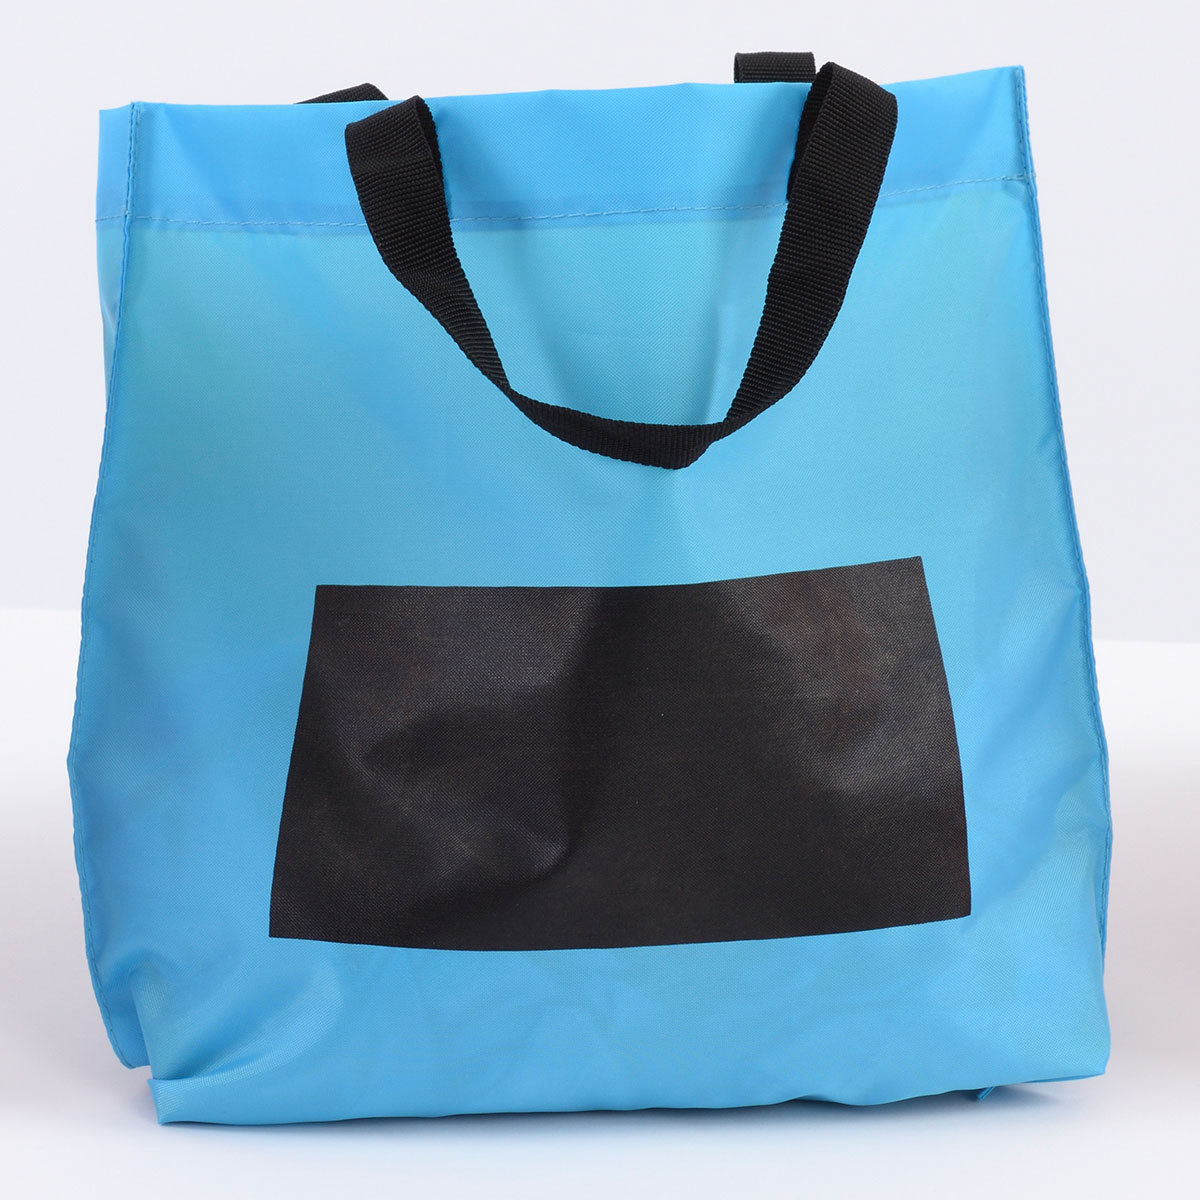 Shape Sorting Bags Carson Dellosa Incastro Popular Playthings 